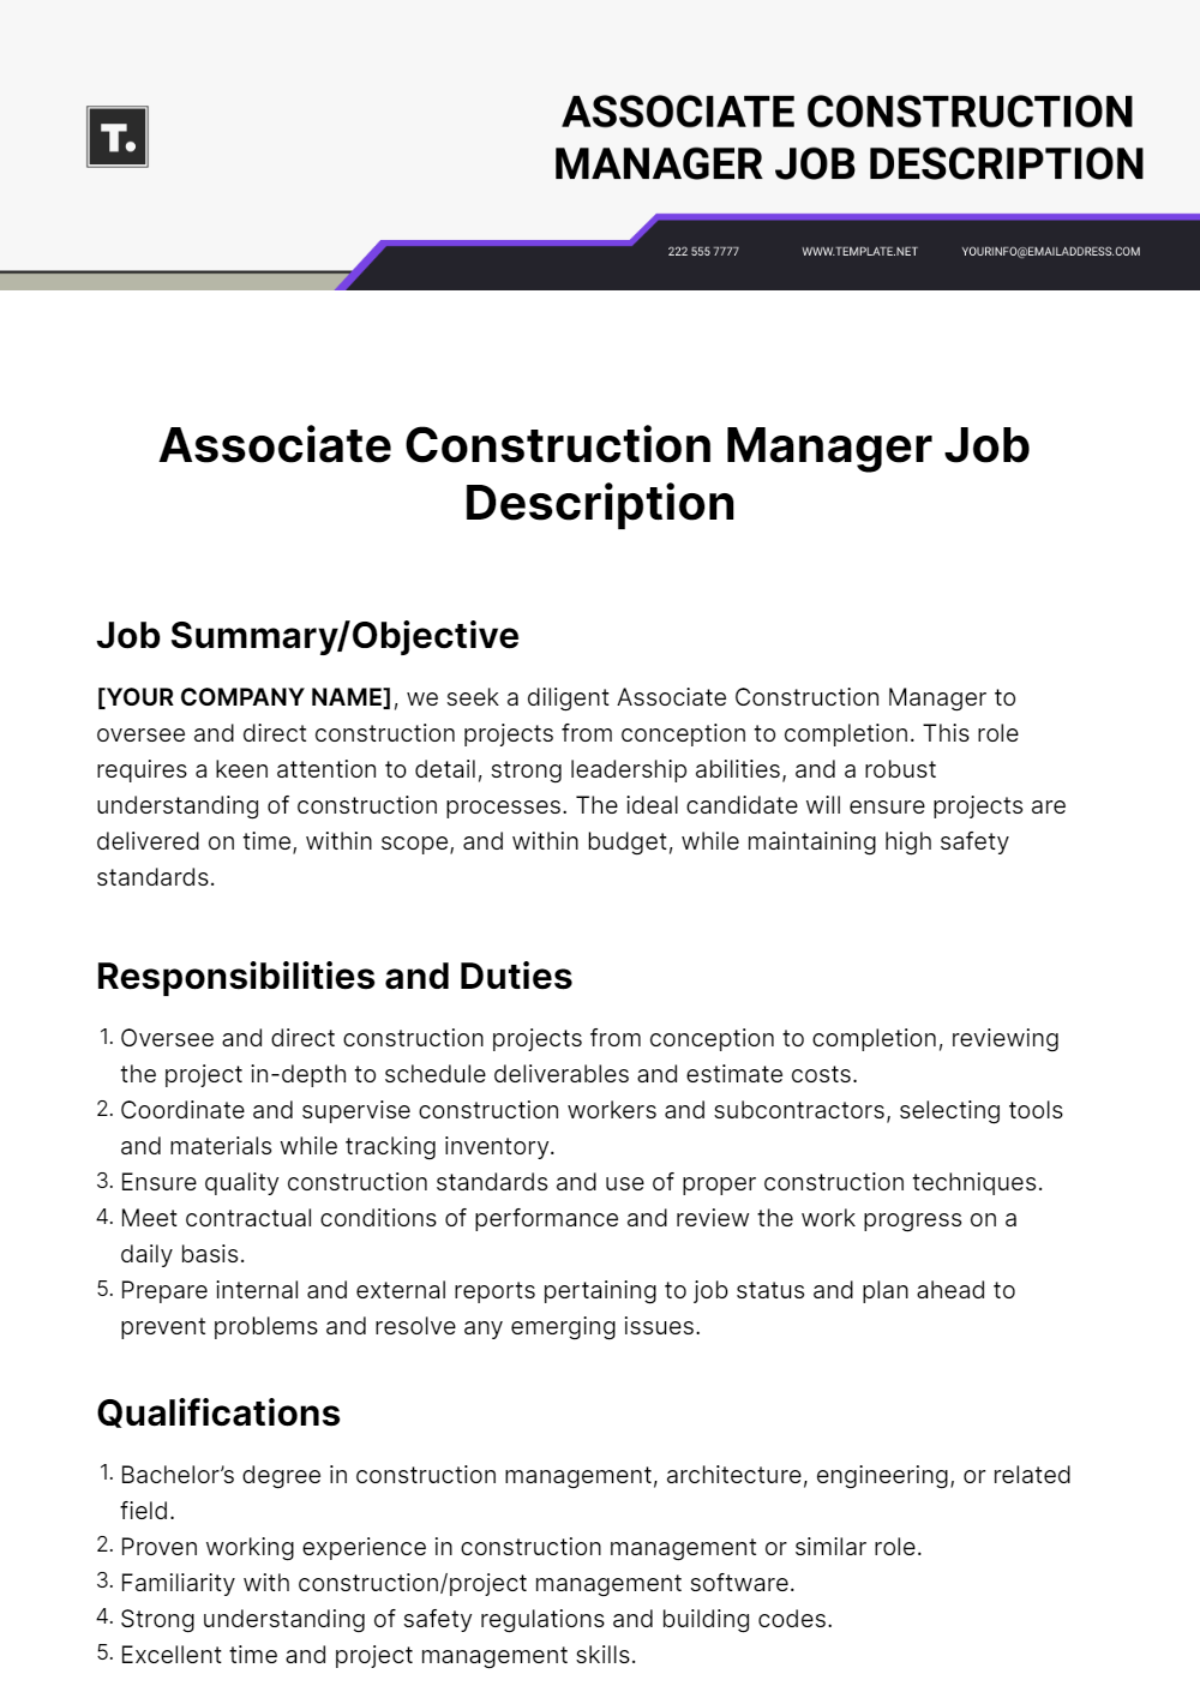 Associate Construction Manager Job Description Template